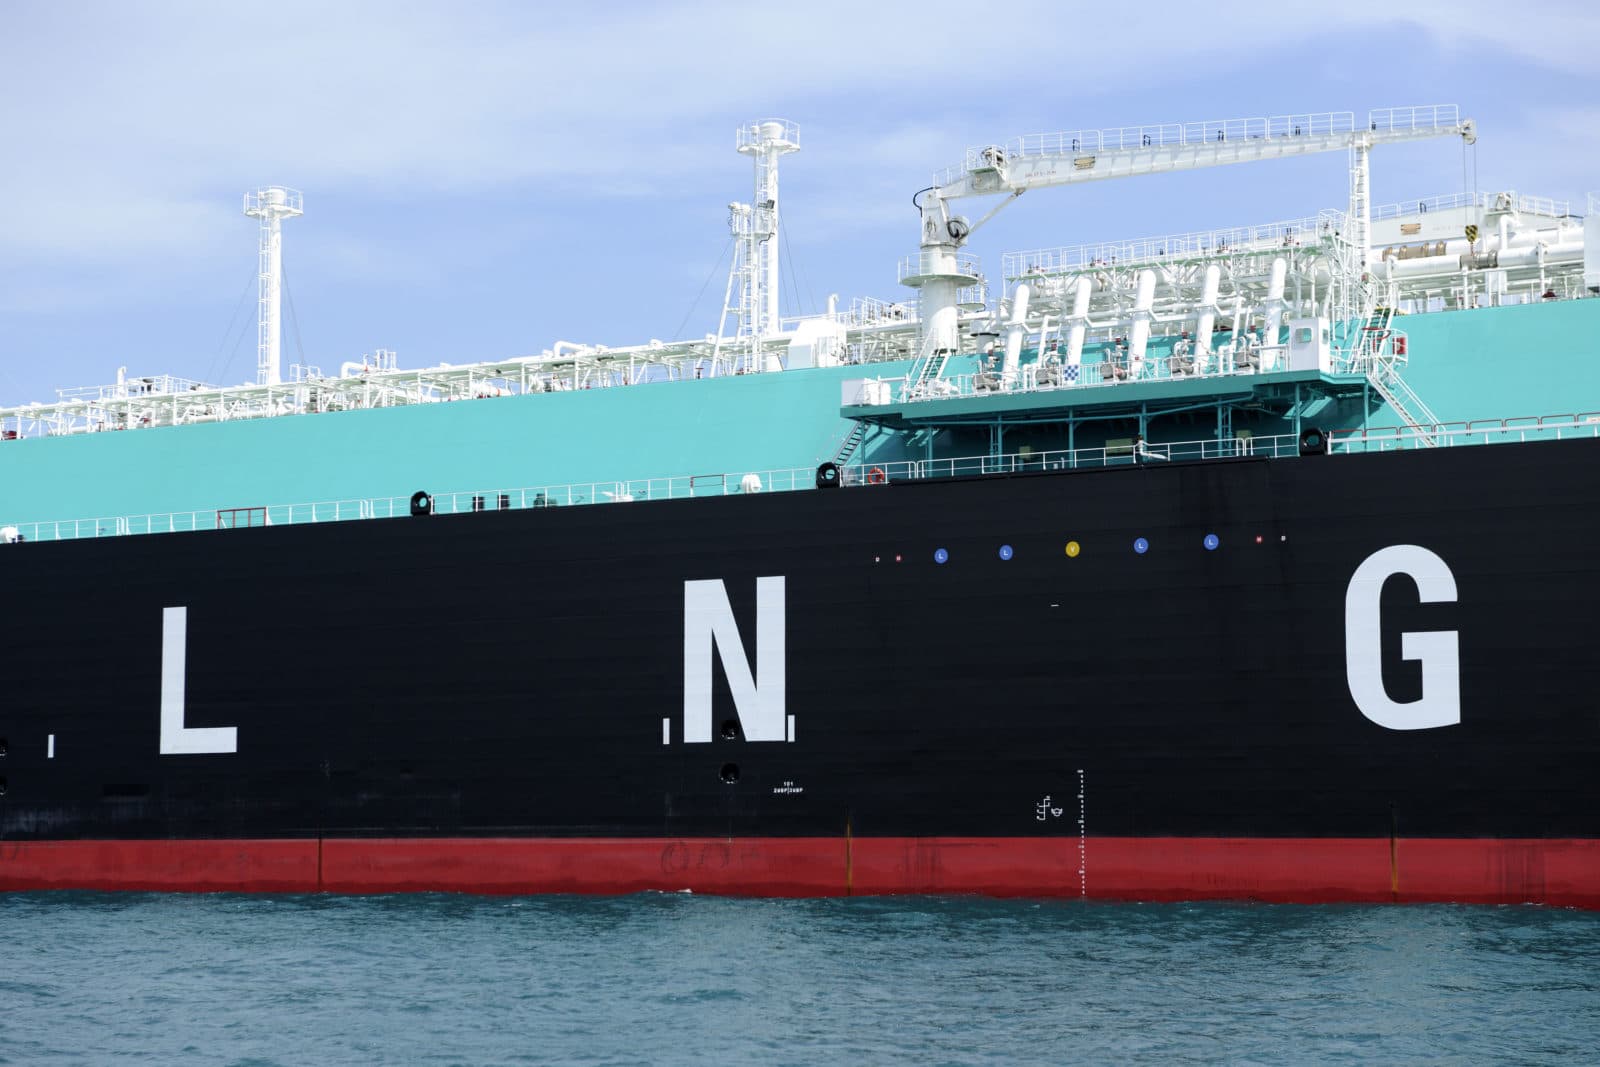 Singaporean Company Places Lowest Bids to Pakistan LNG Tenders